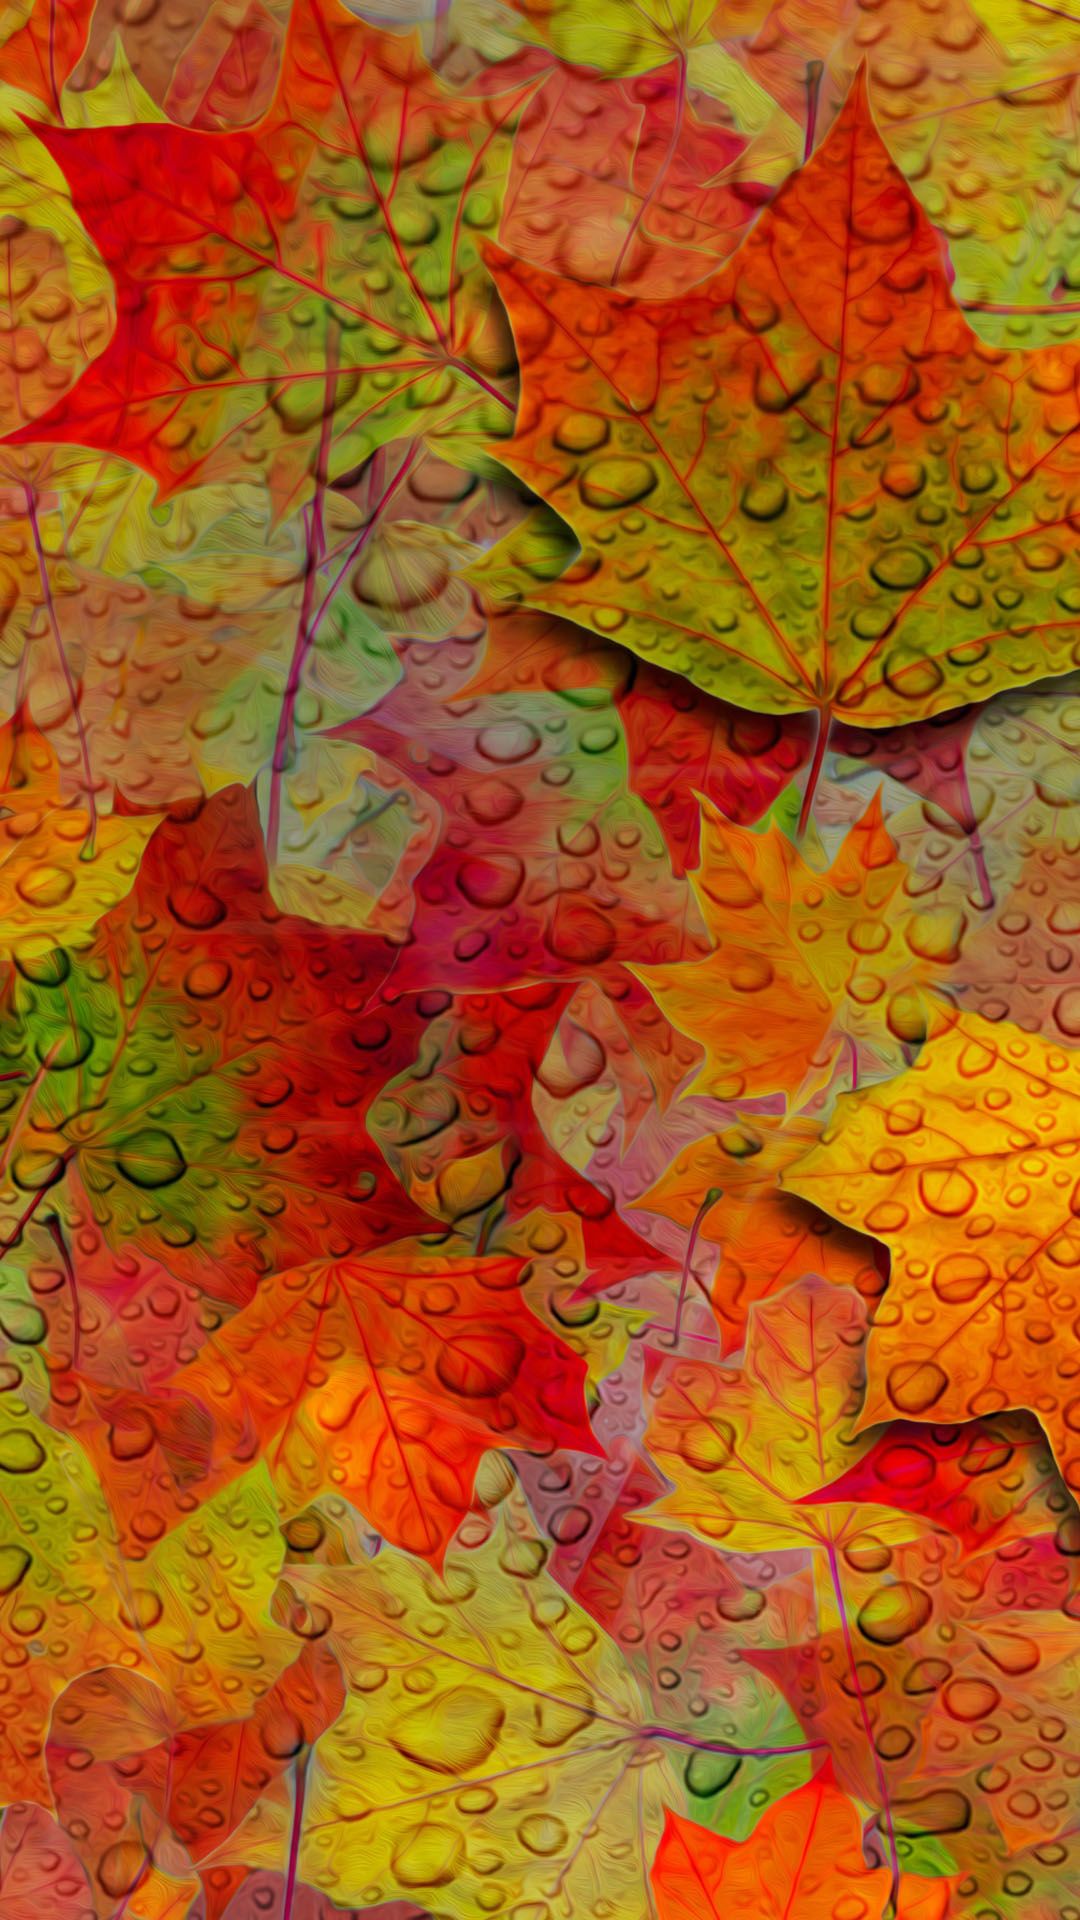 iPhone 6 Autumn Wallpaper